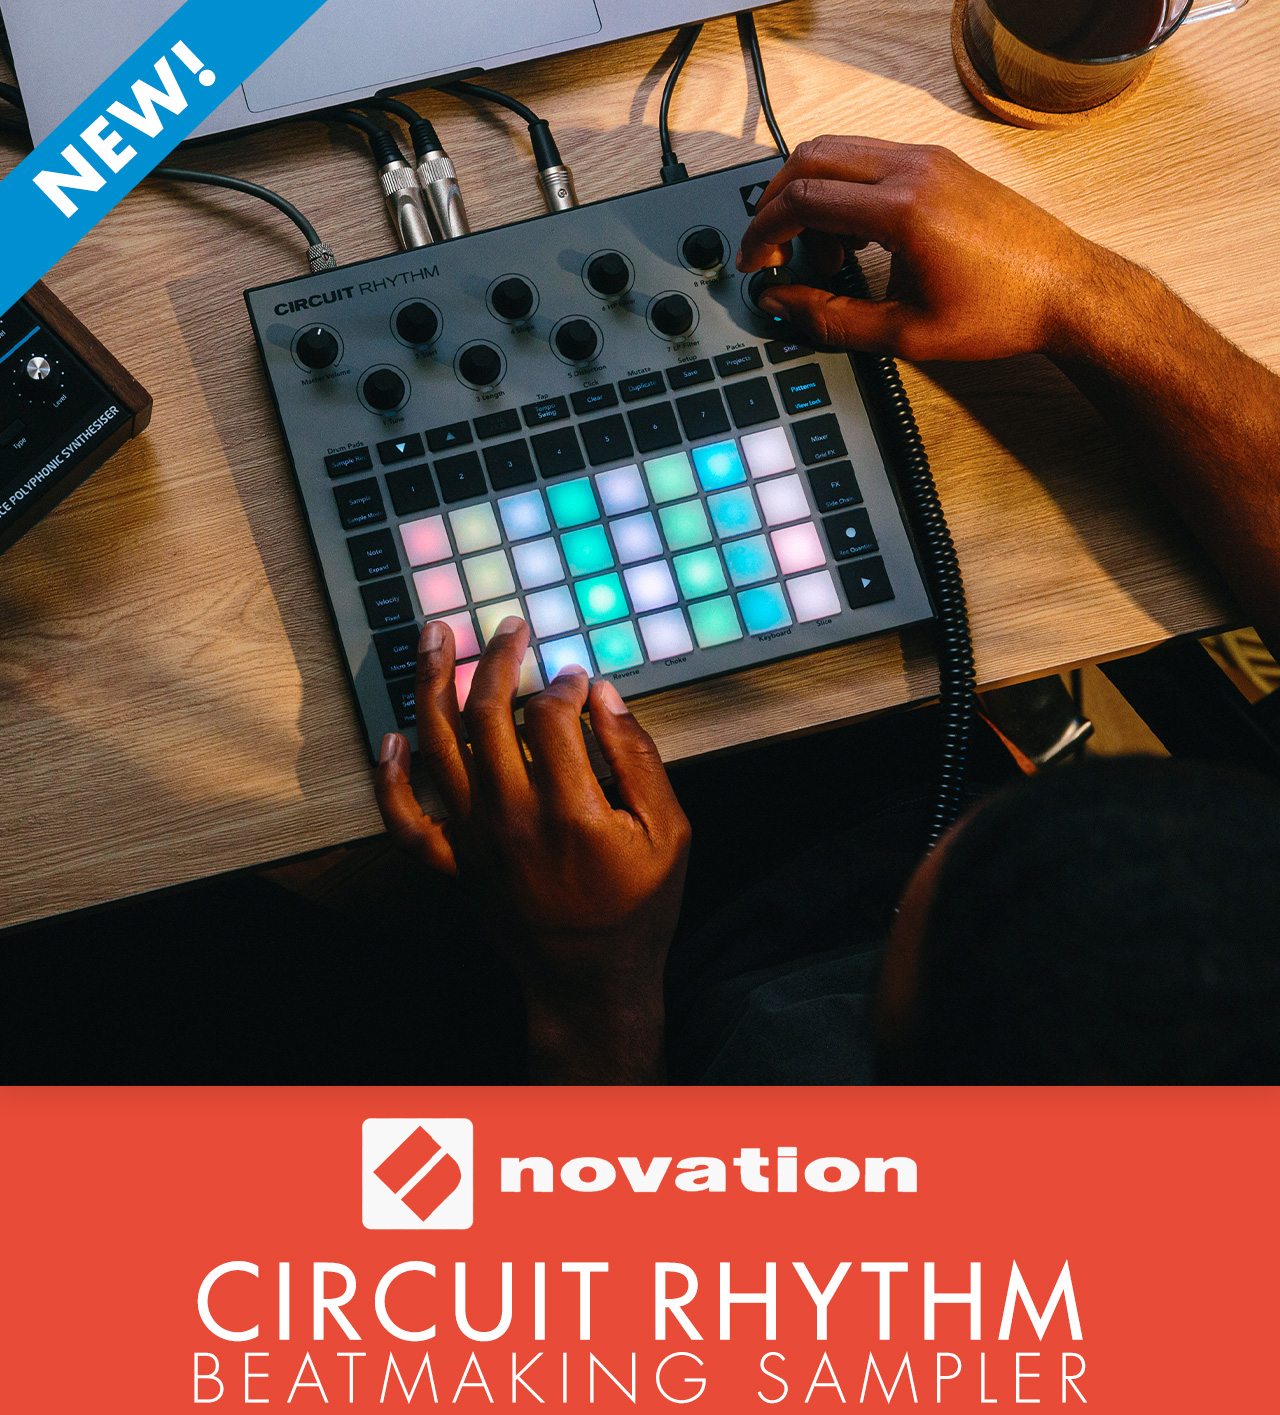 New From Novation: Circuit Rhythm Beatmaking Sampler